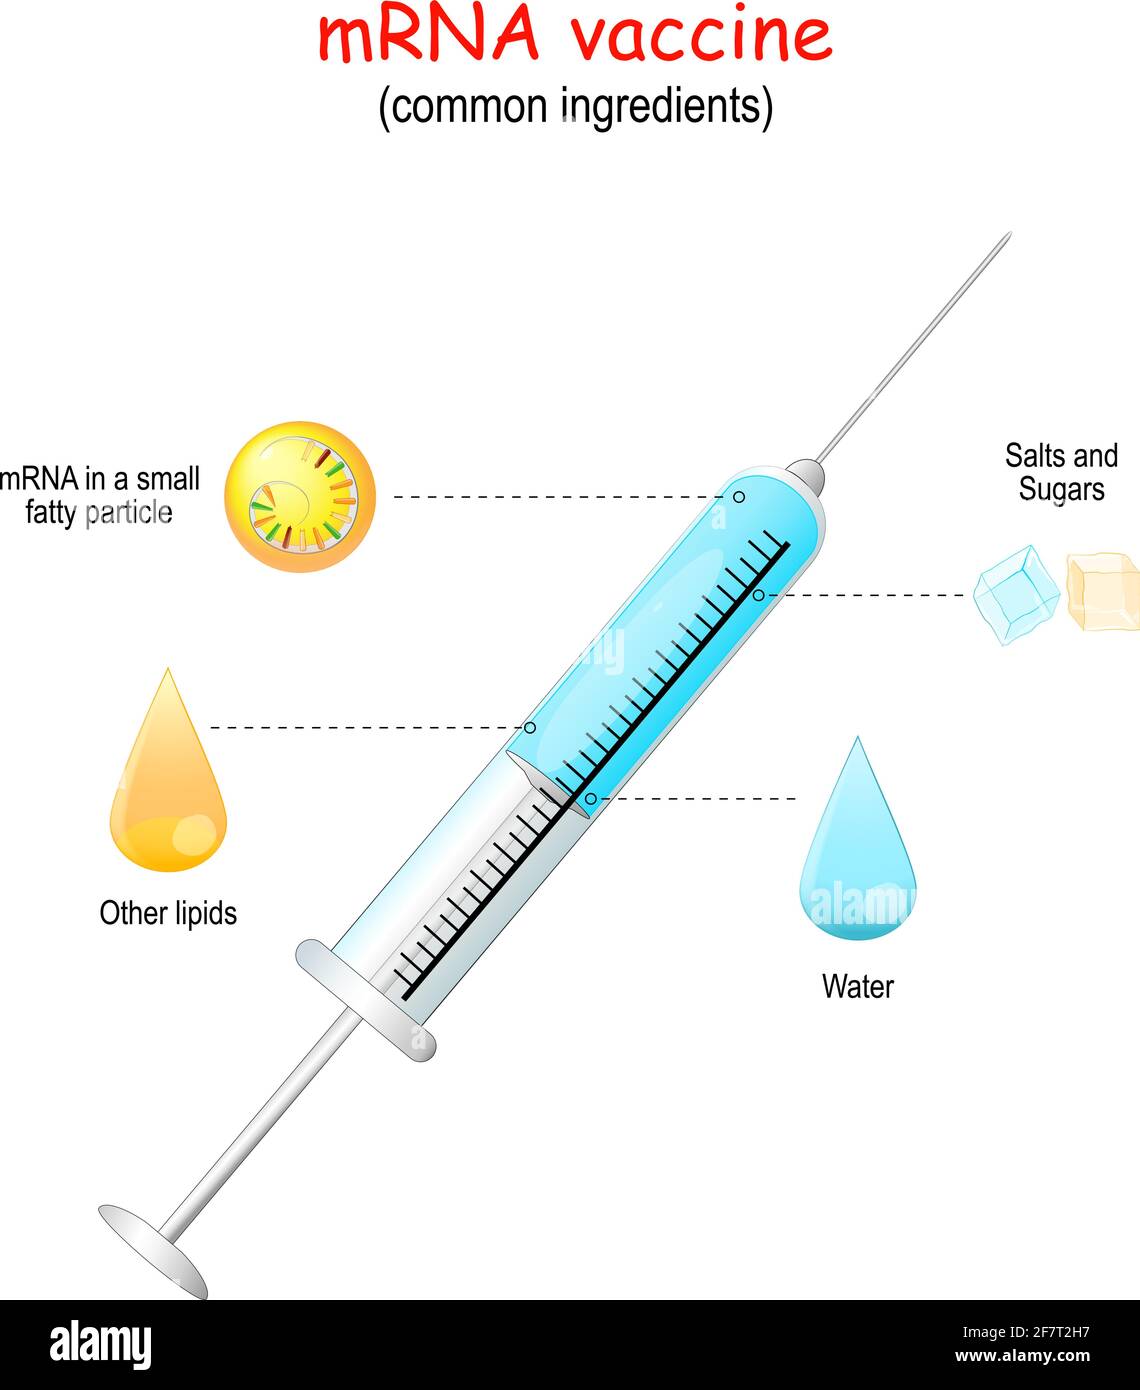 Vaccin ARNm. Que contient un vaccin ARNm. Illustration vectorielle. Gros plan de la seringue avec les ingrédients du vaccin COVID-19 Illustration de Vecteur